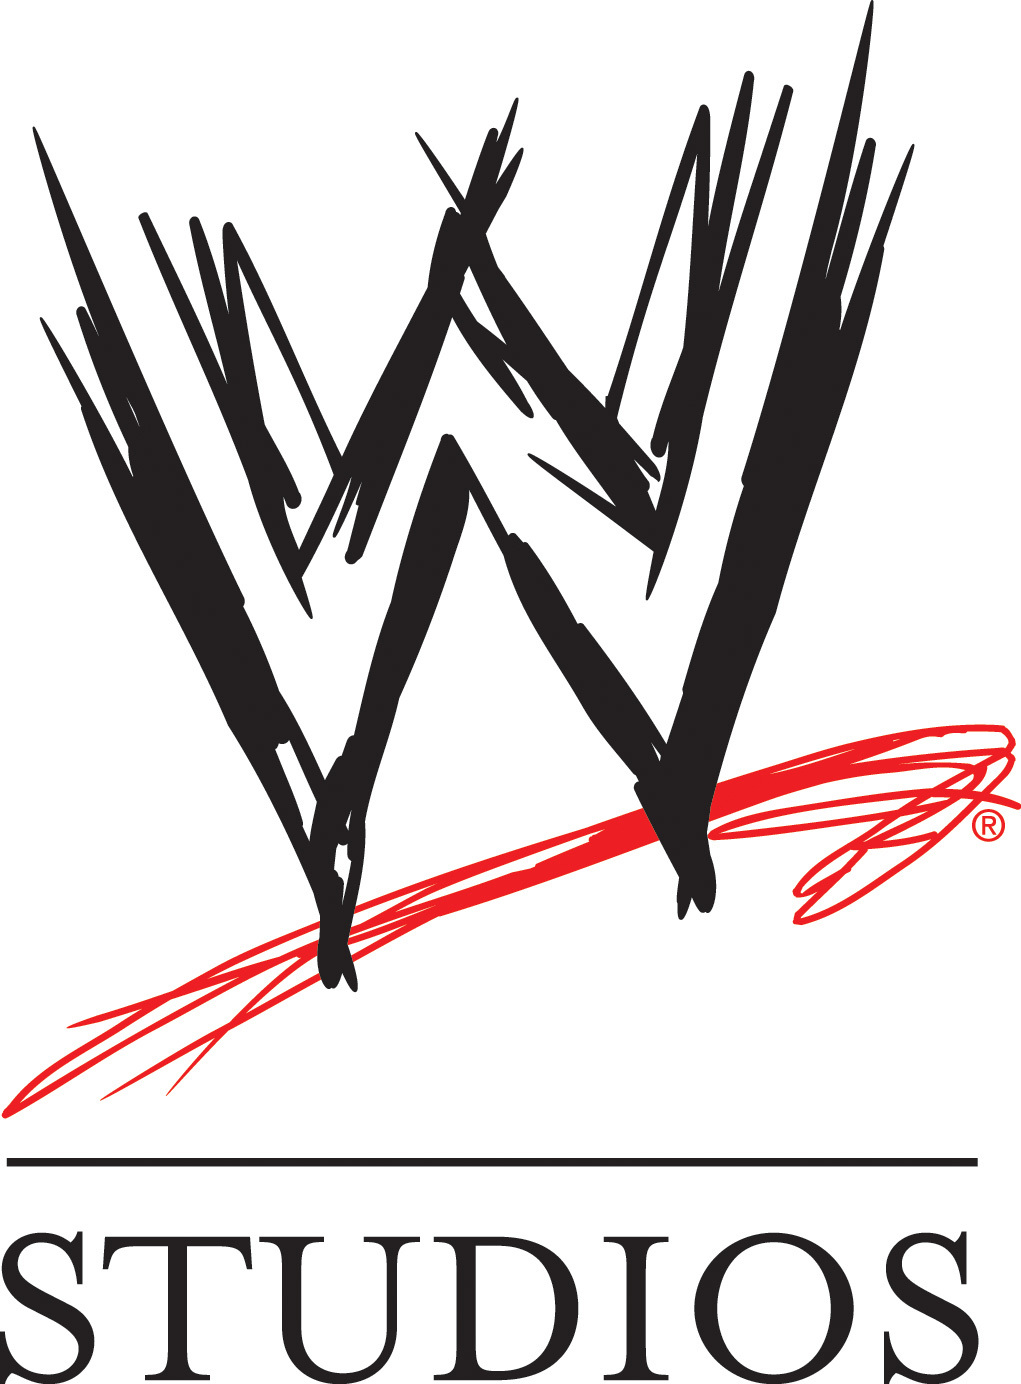 WWE Studios, Warner Bros. Entertainment Wiki